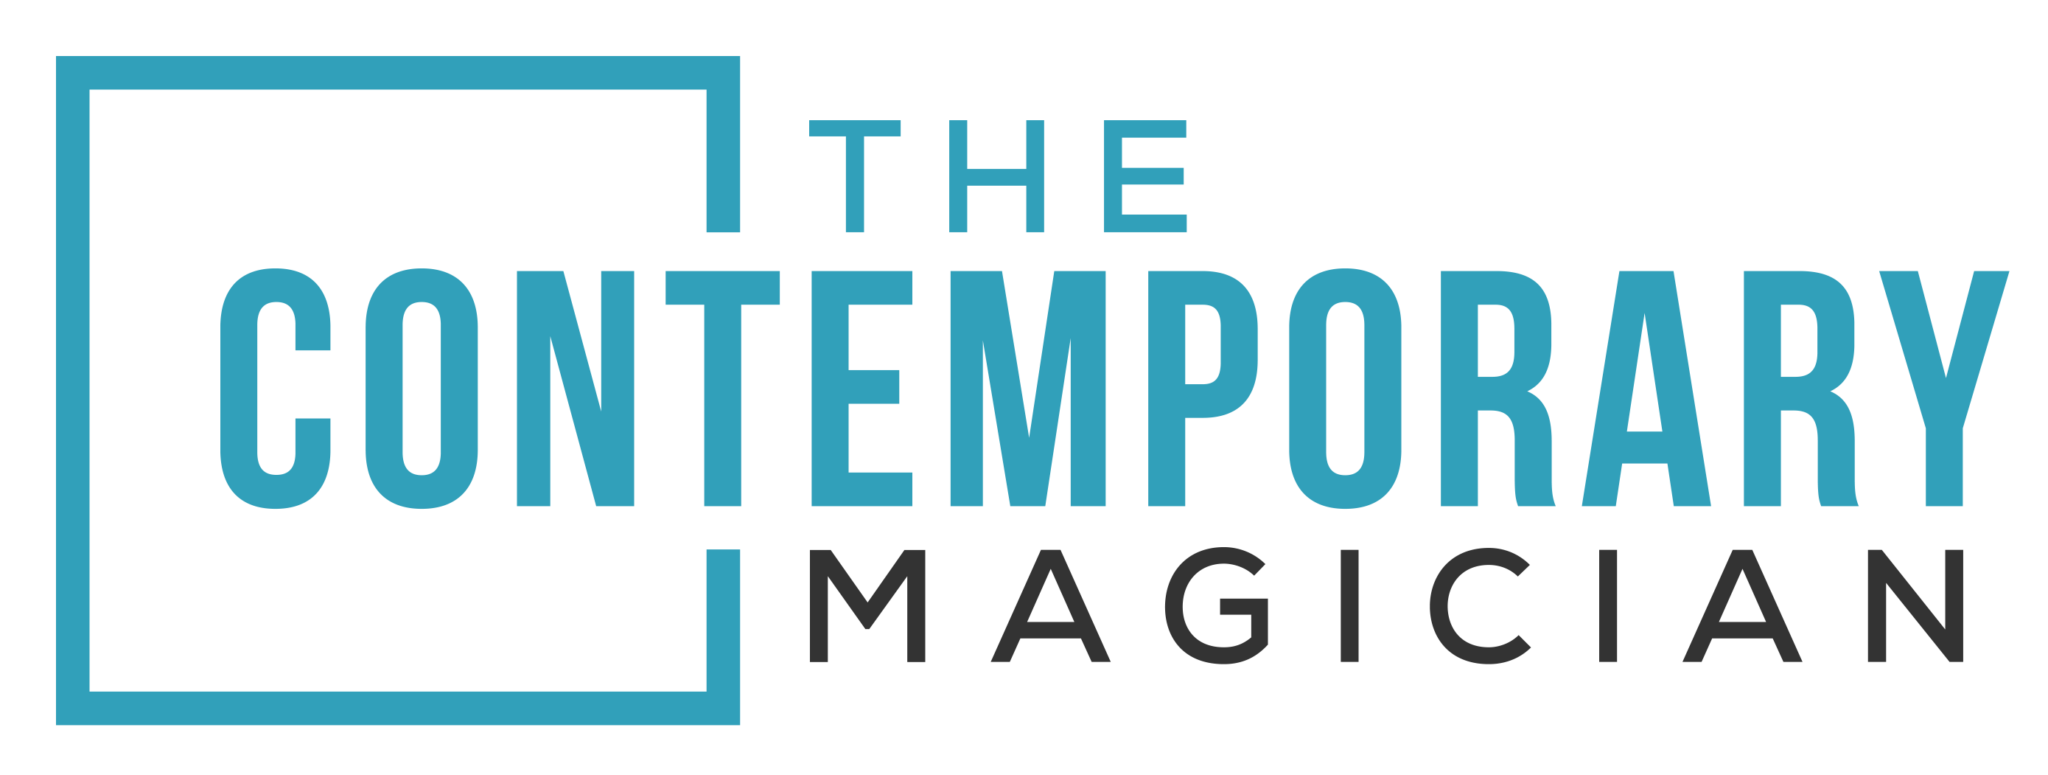 Contemporary Magician for hire Logo